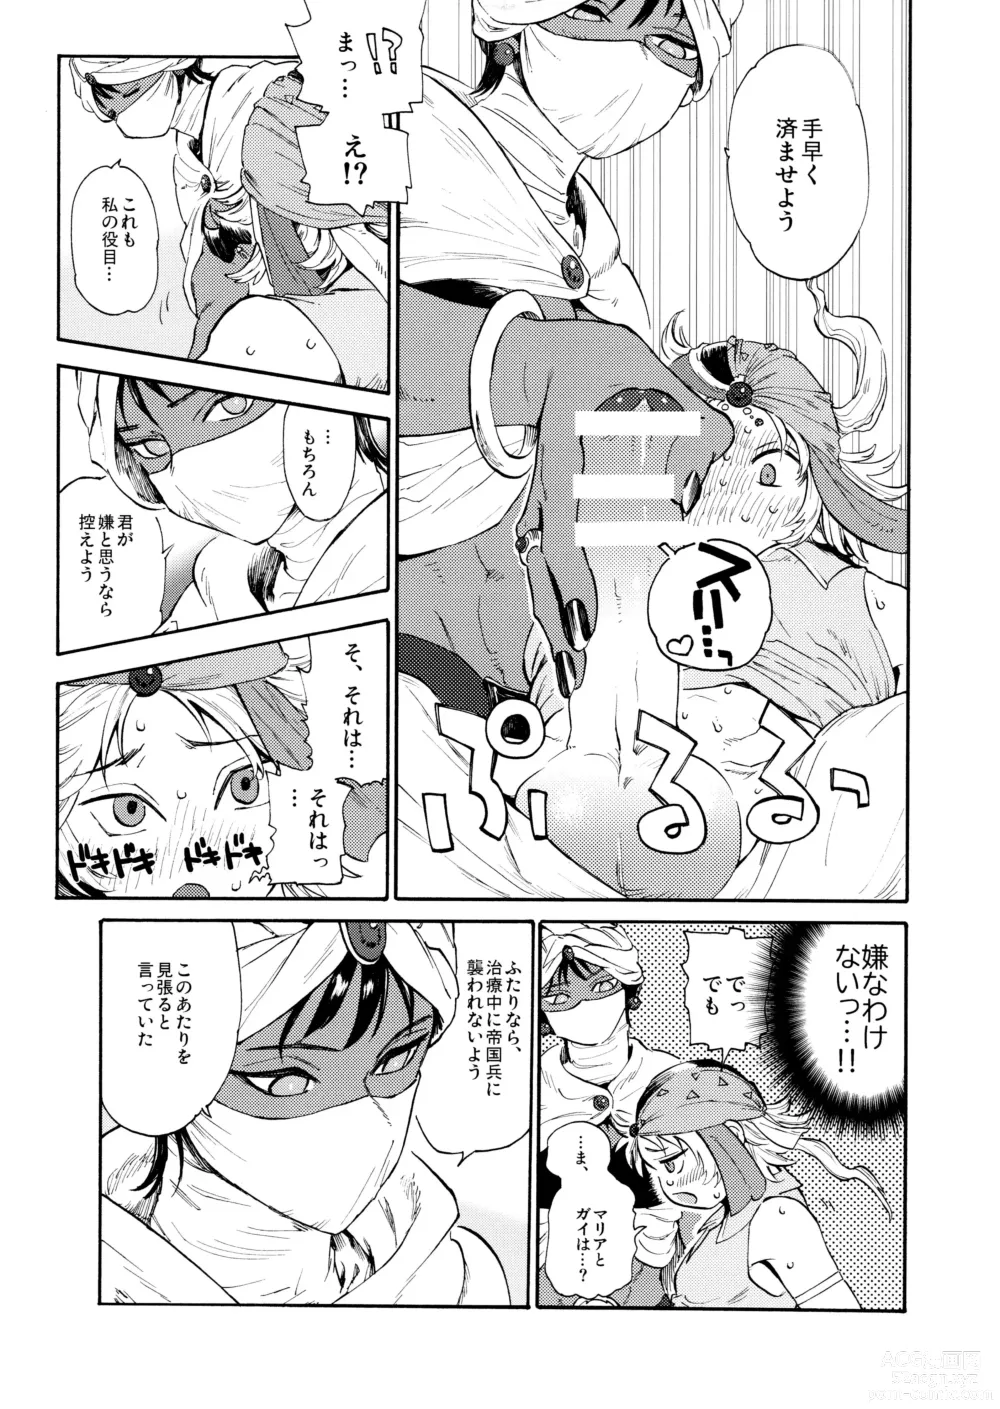 Page 9 of doujinshi Unmei no Karepi